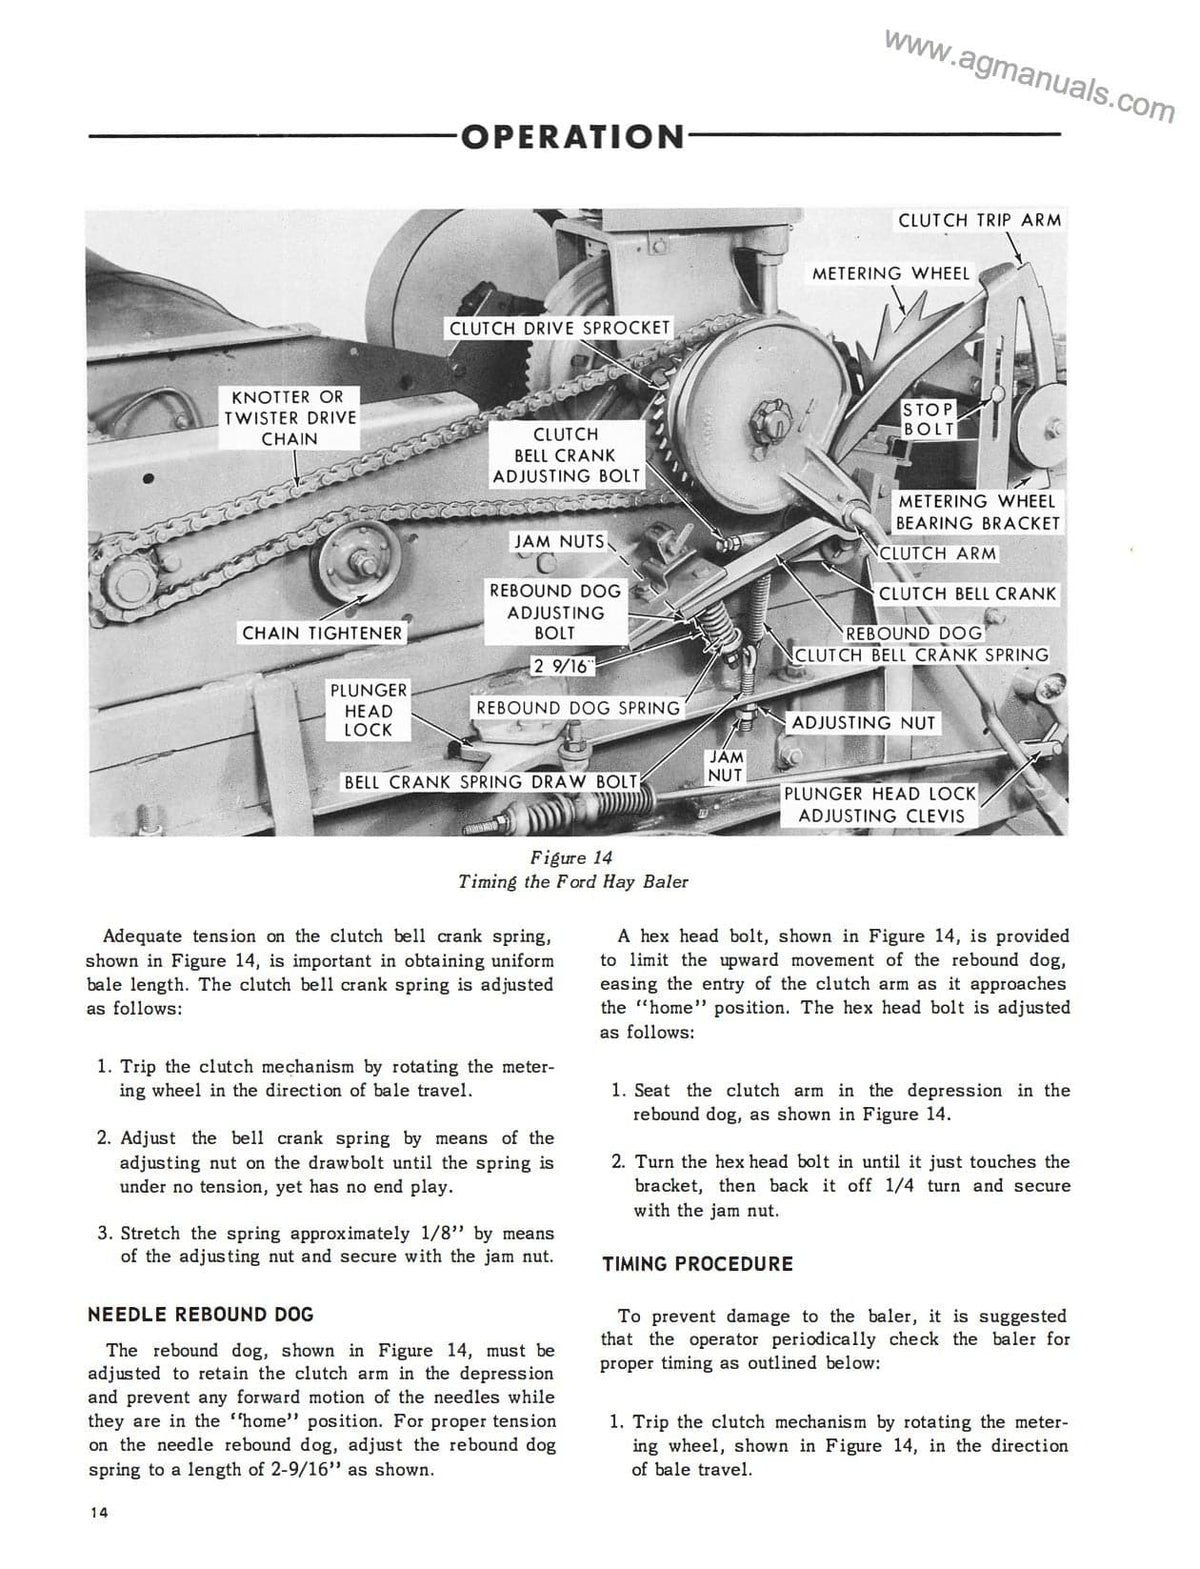 Ford 540 Hay Baler - Operator's Manual - Ag Manuals - A Provider of Digital Farm Manuals - 2